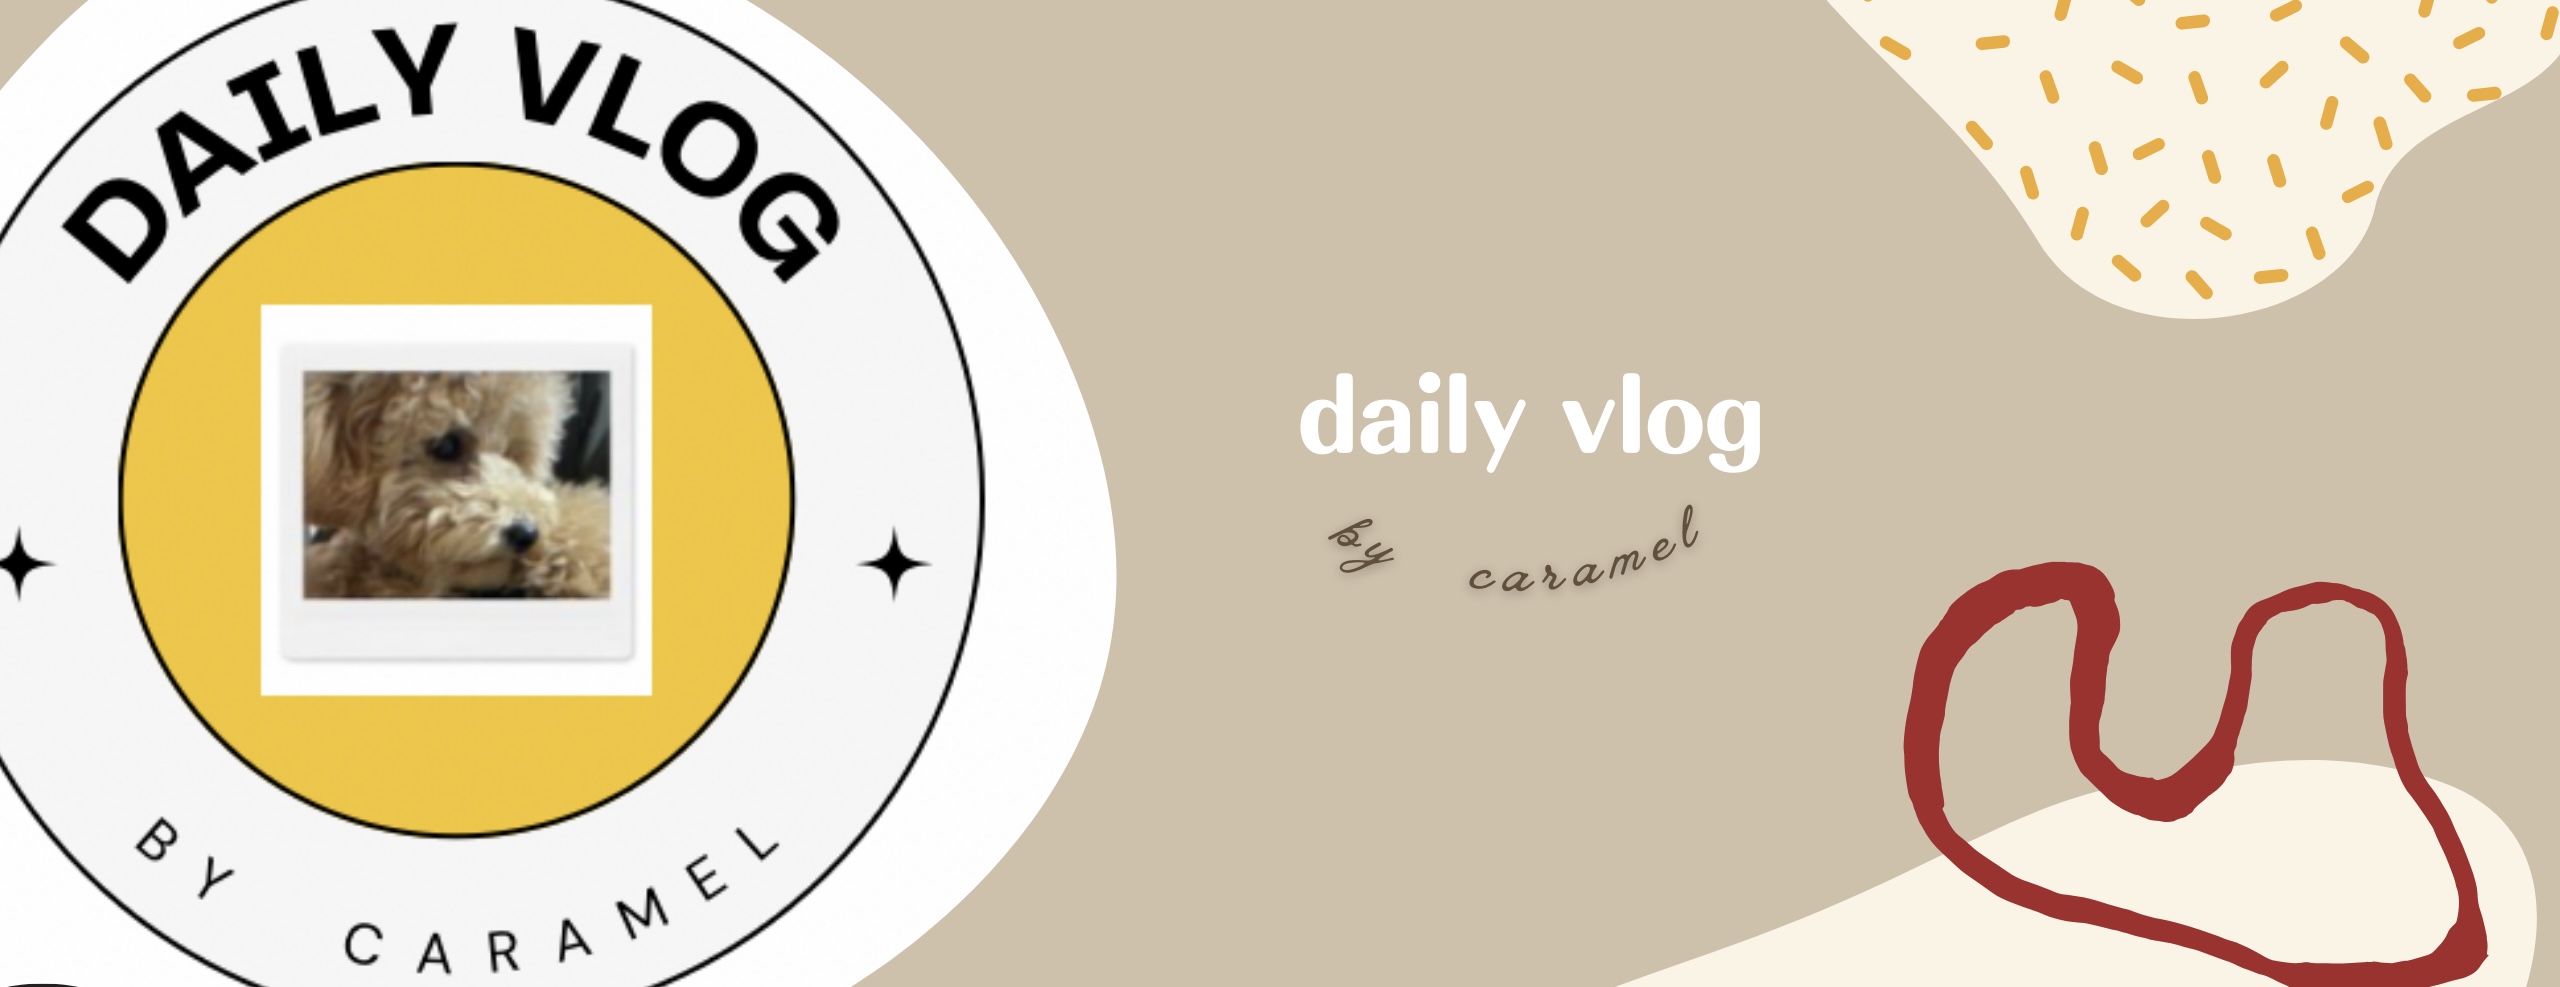 daily vlog by caramel